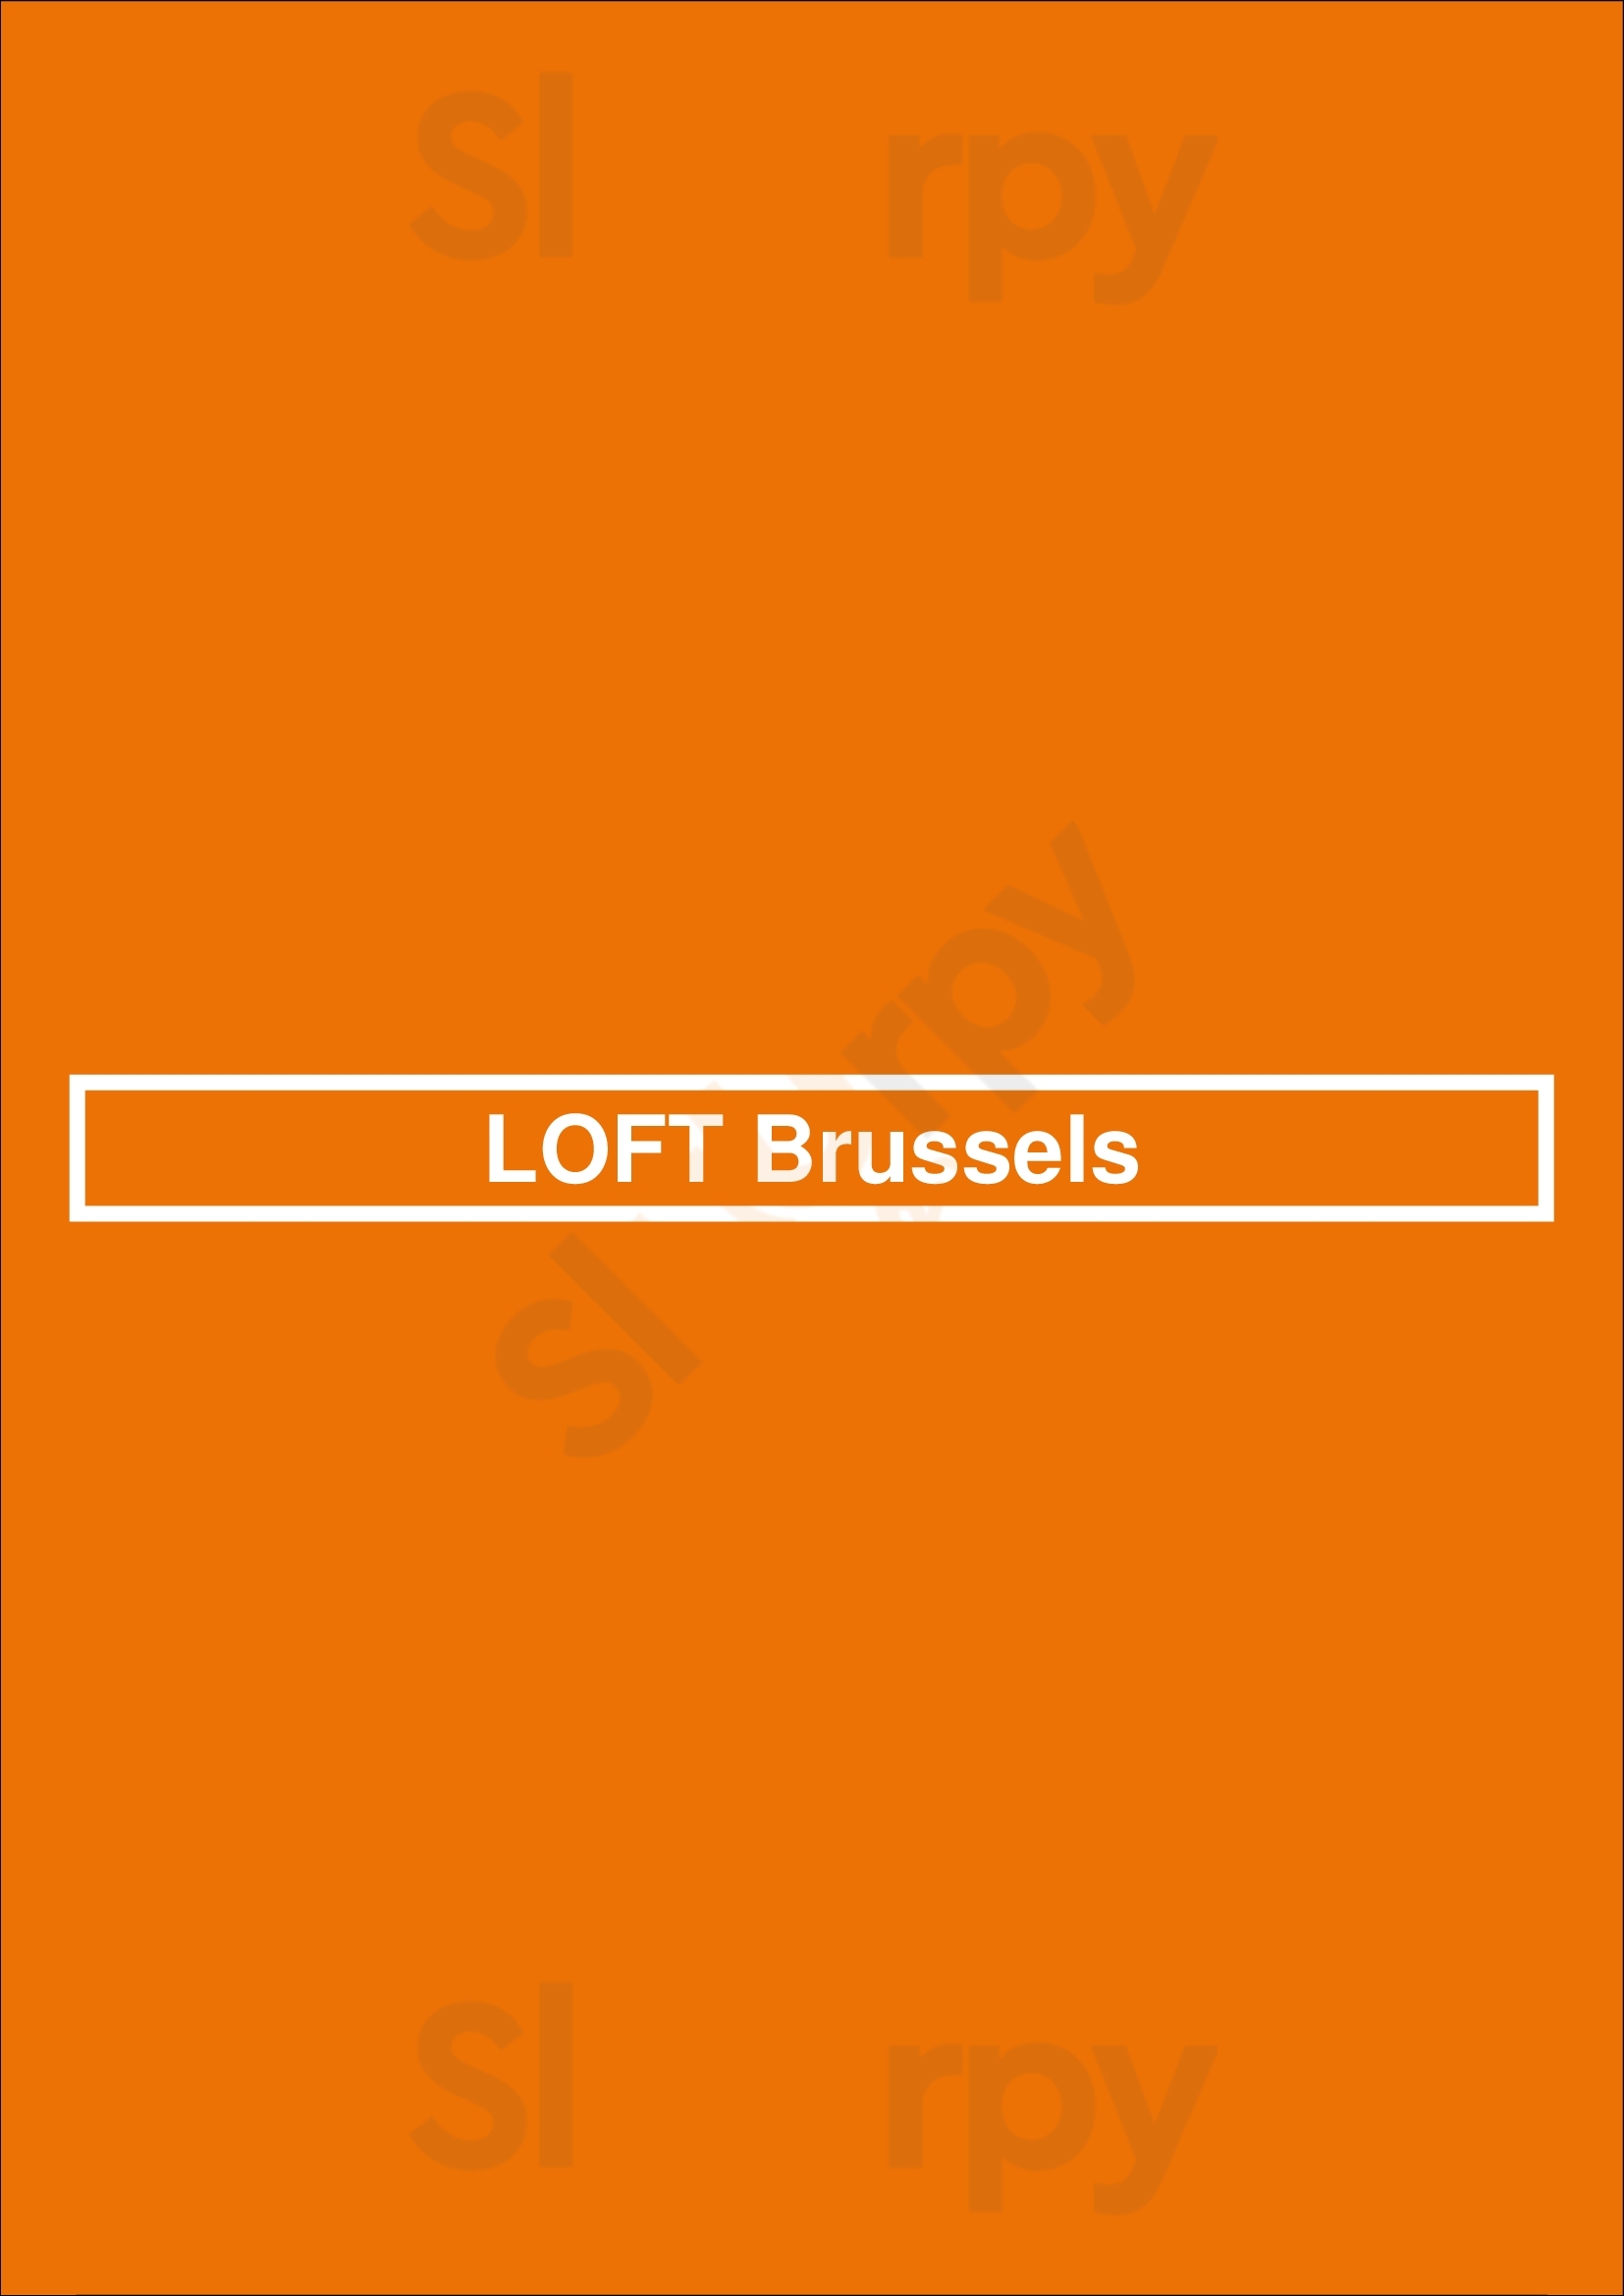 Loft Brussels Bruxelles Menu - 1